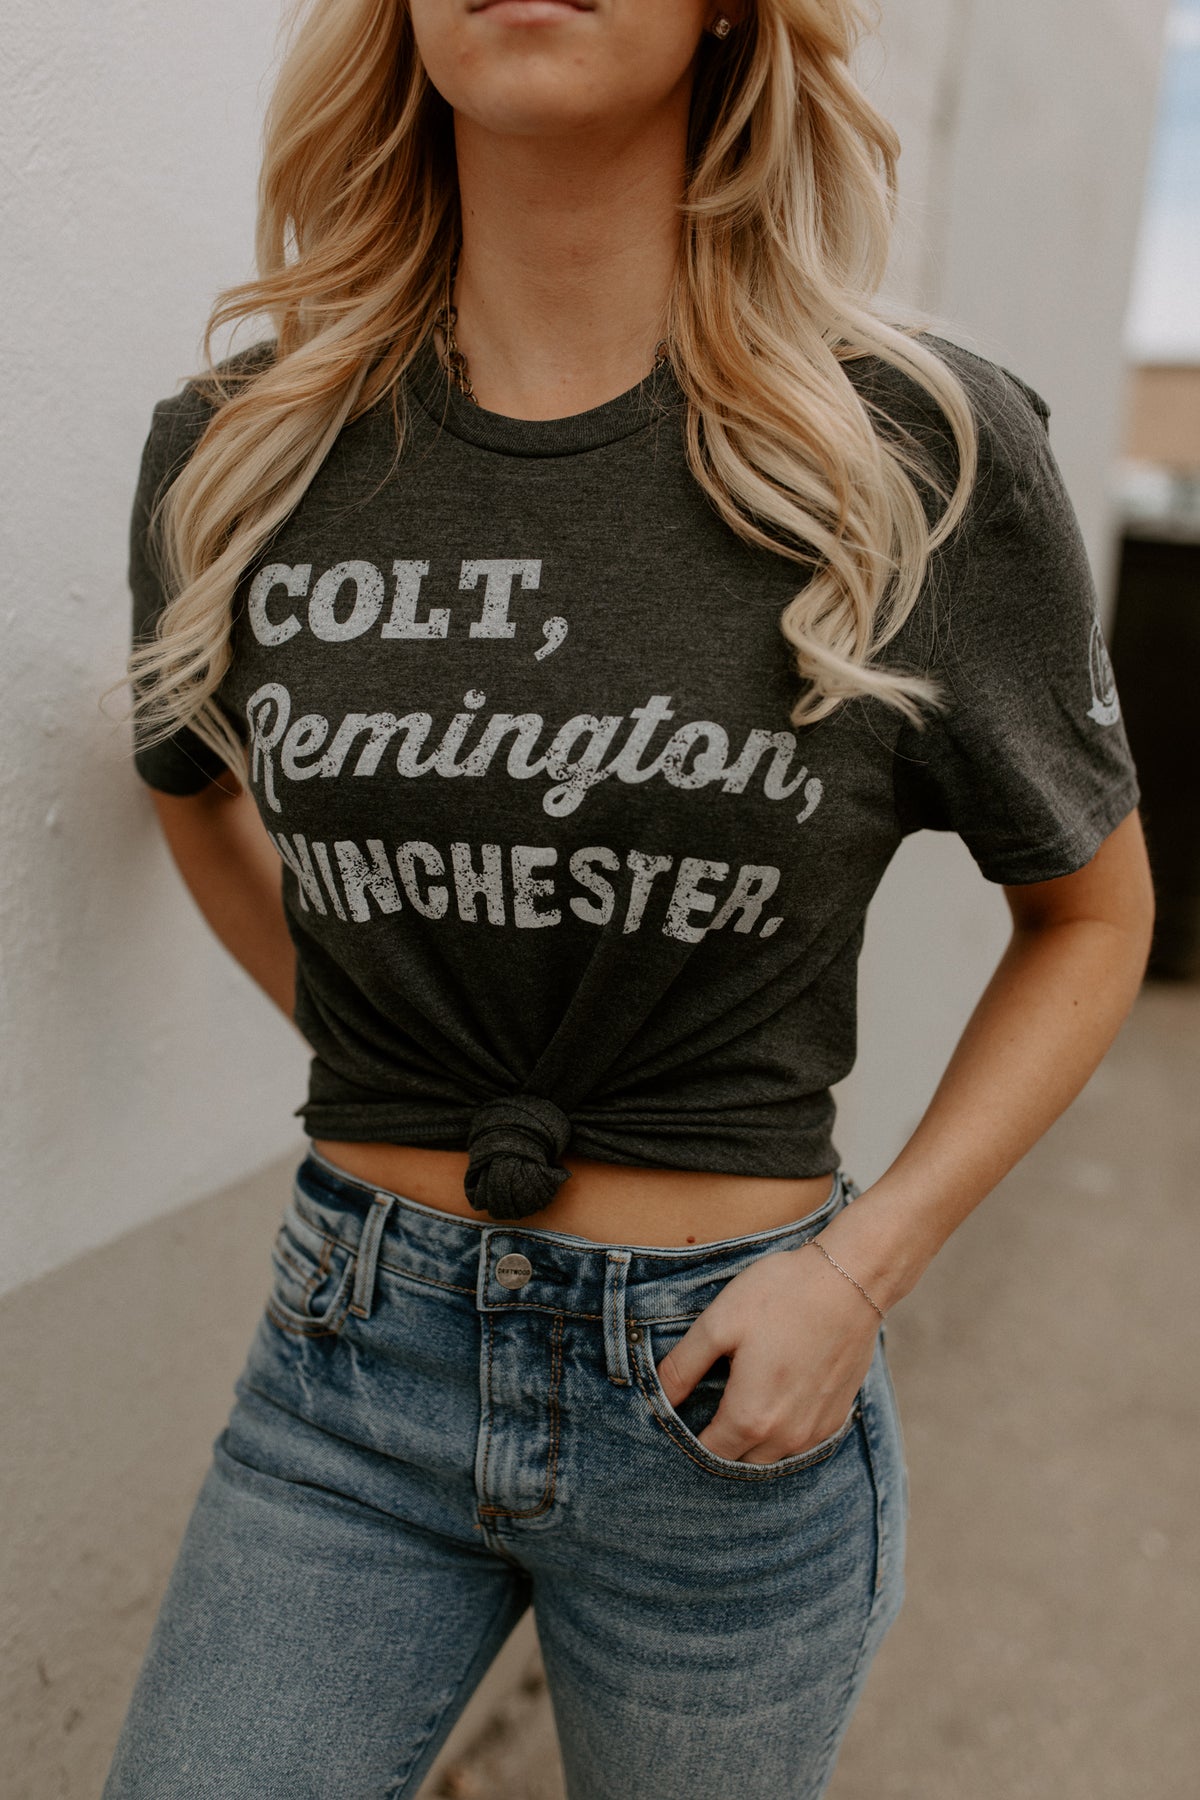 Colt, Remington, Winchester Tee